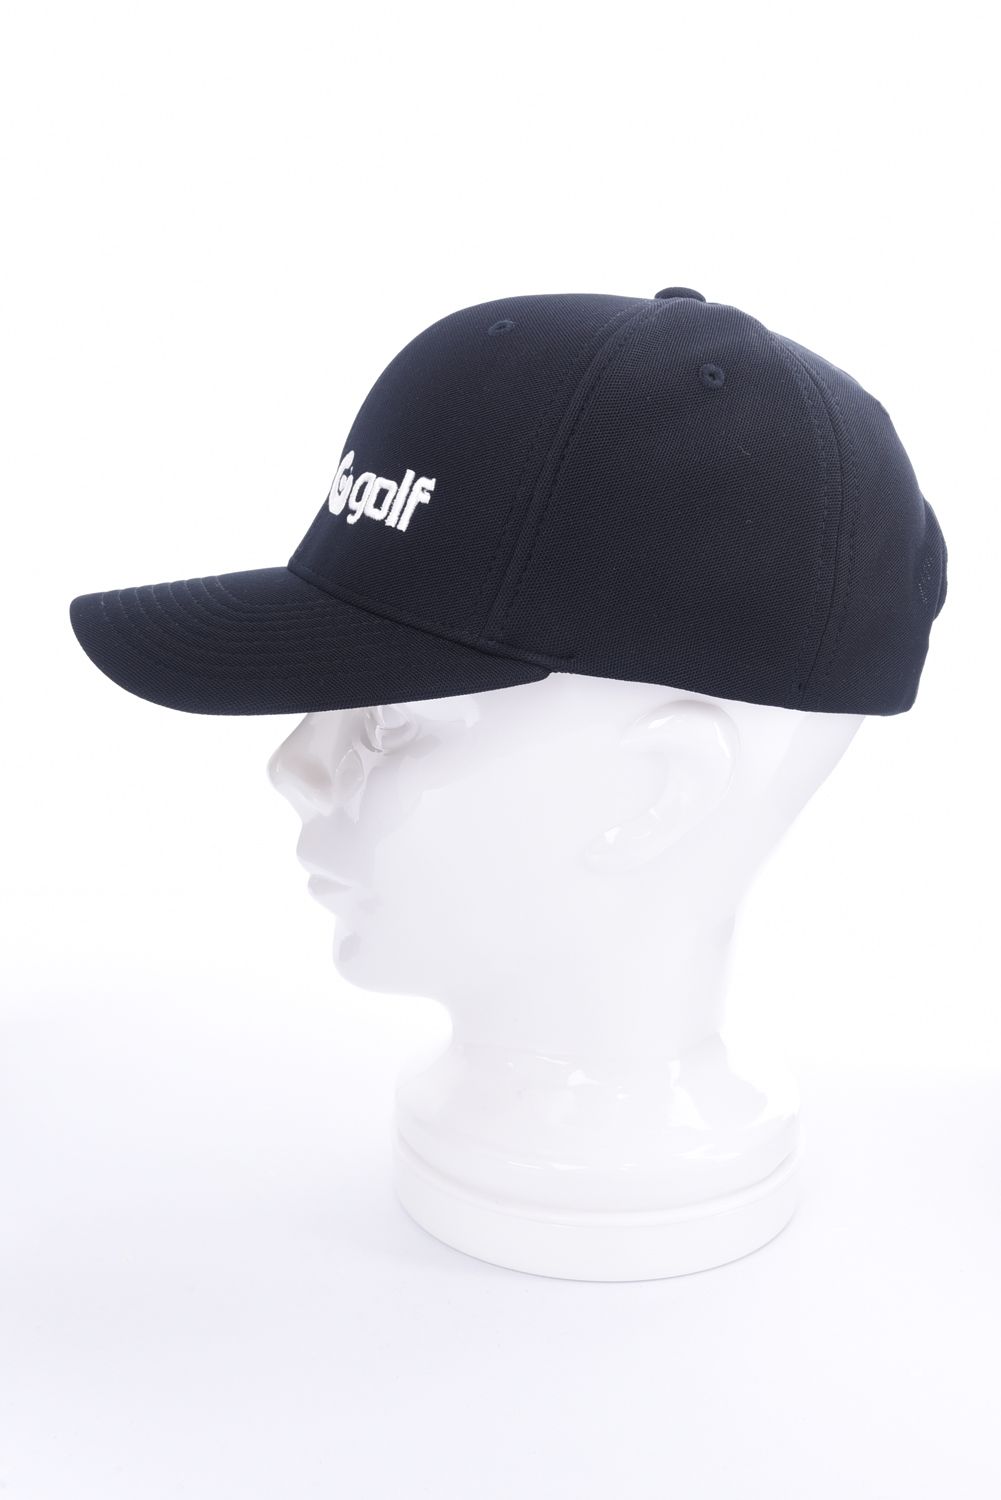 gravis golf - G-ICON FITTED CAP / ブランドロゴ刺繍 キャップ